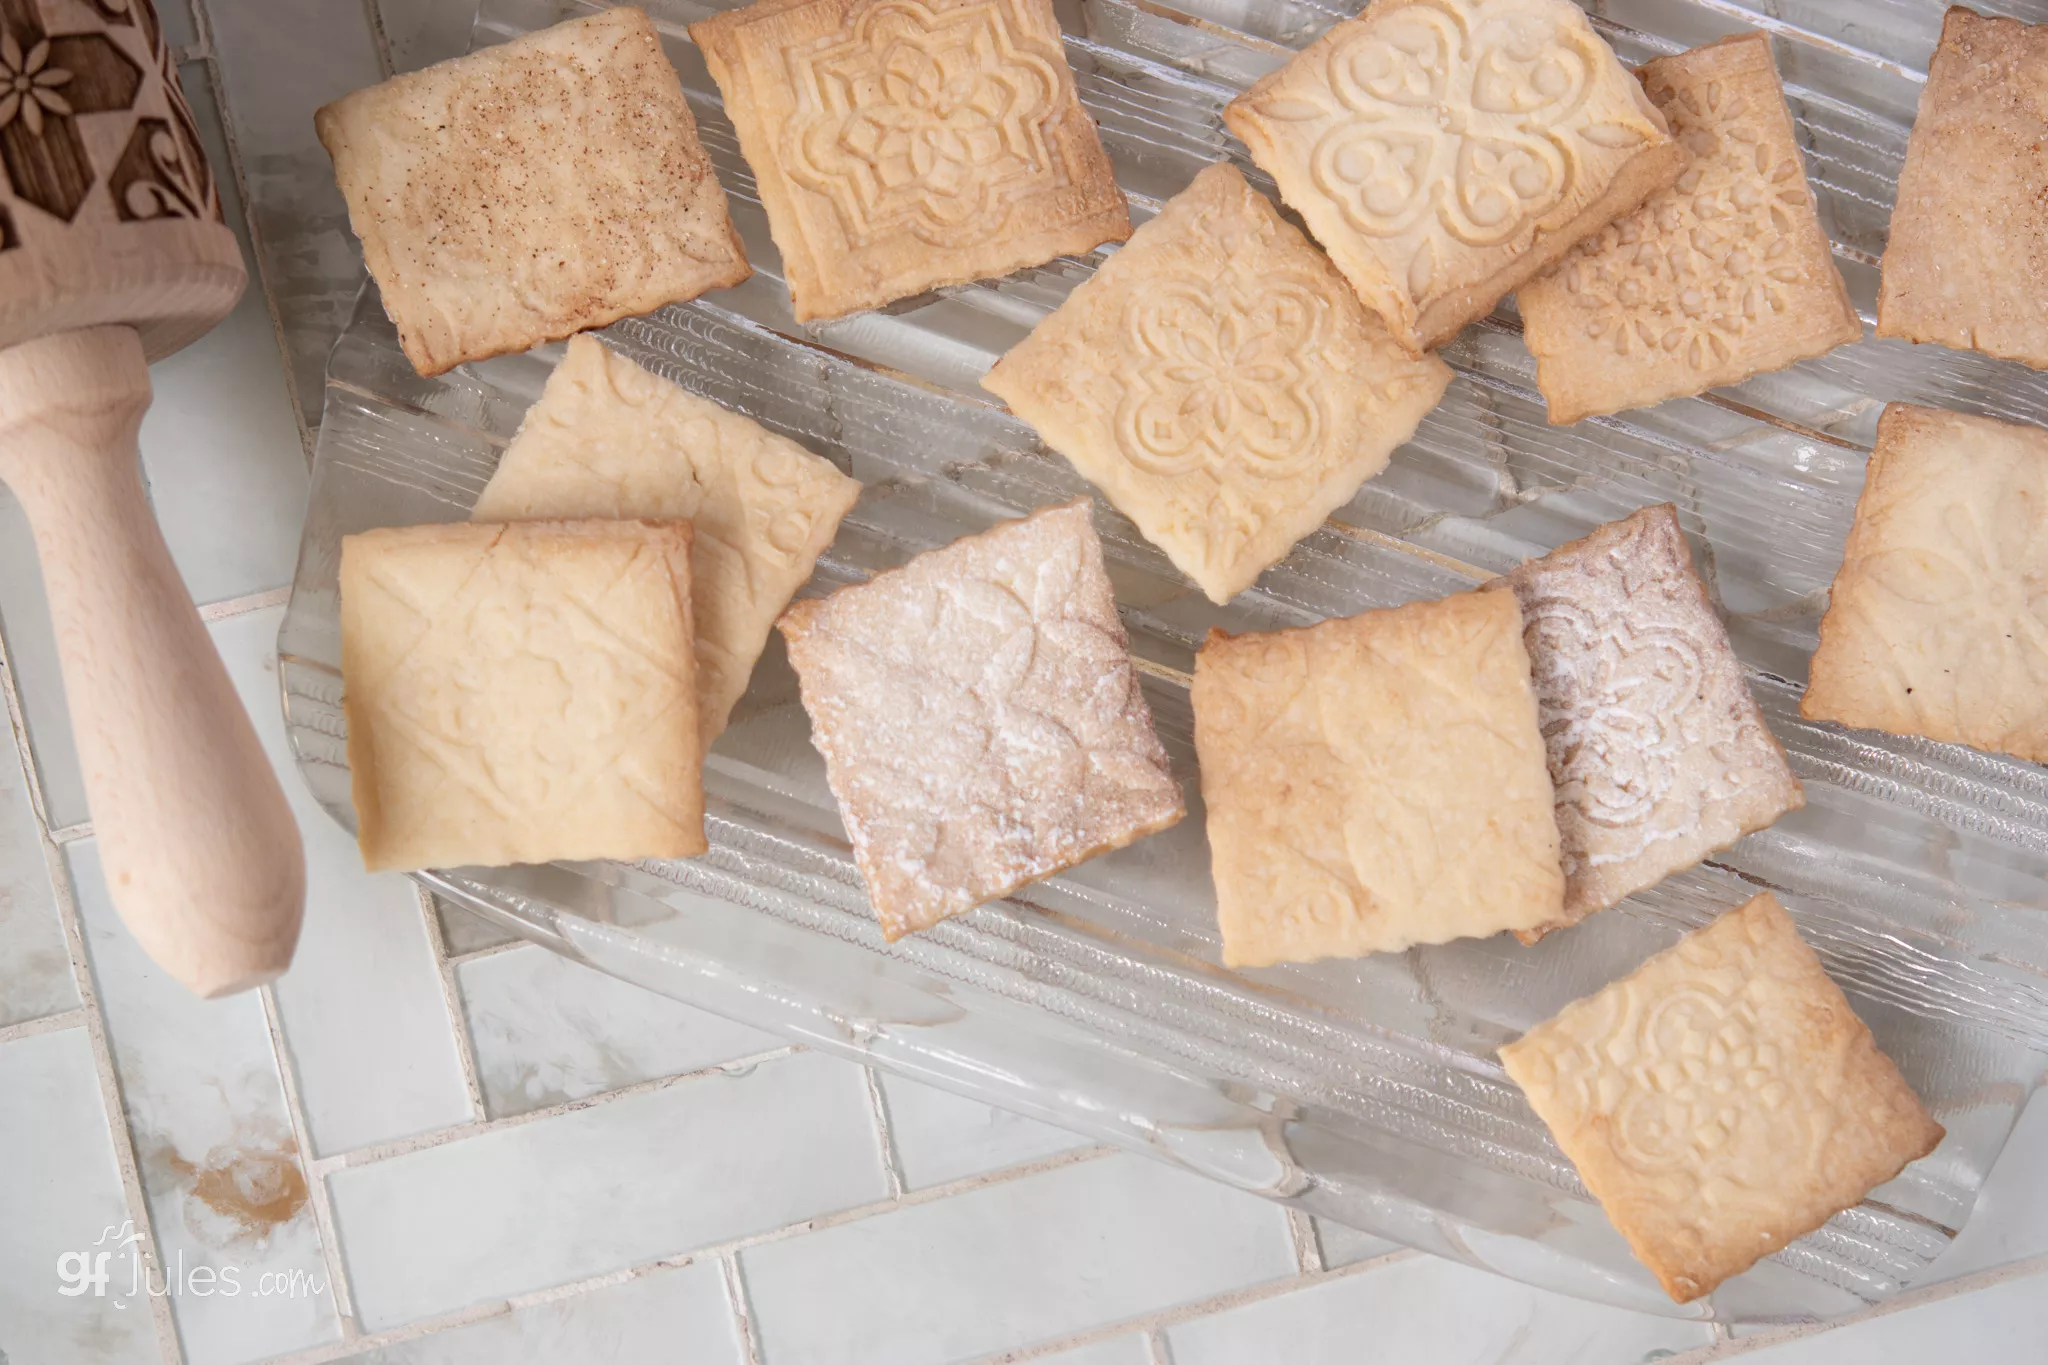 Embossed rolling pins: Make the best-looking cookies ever